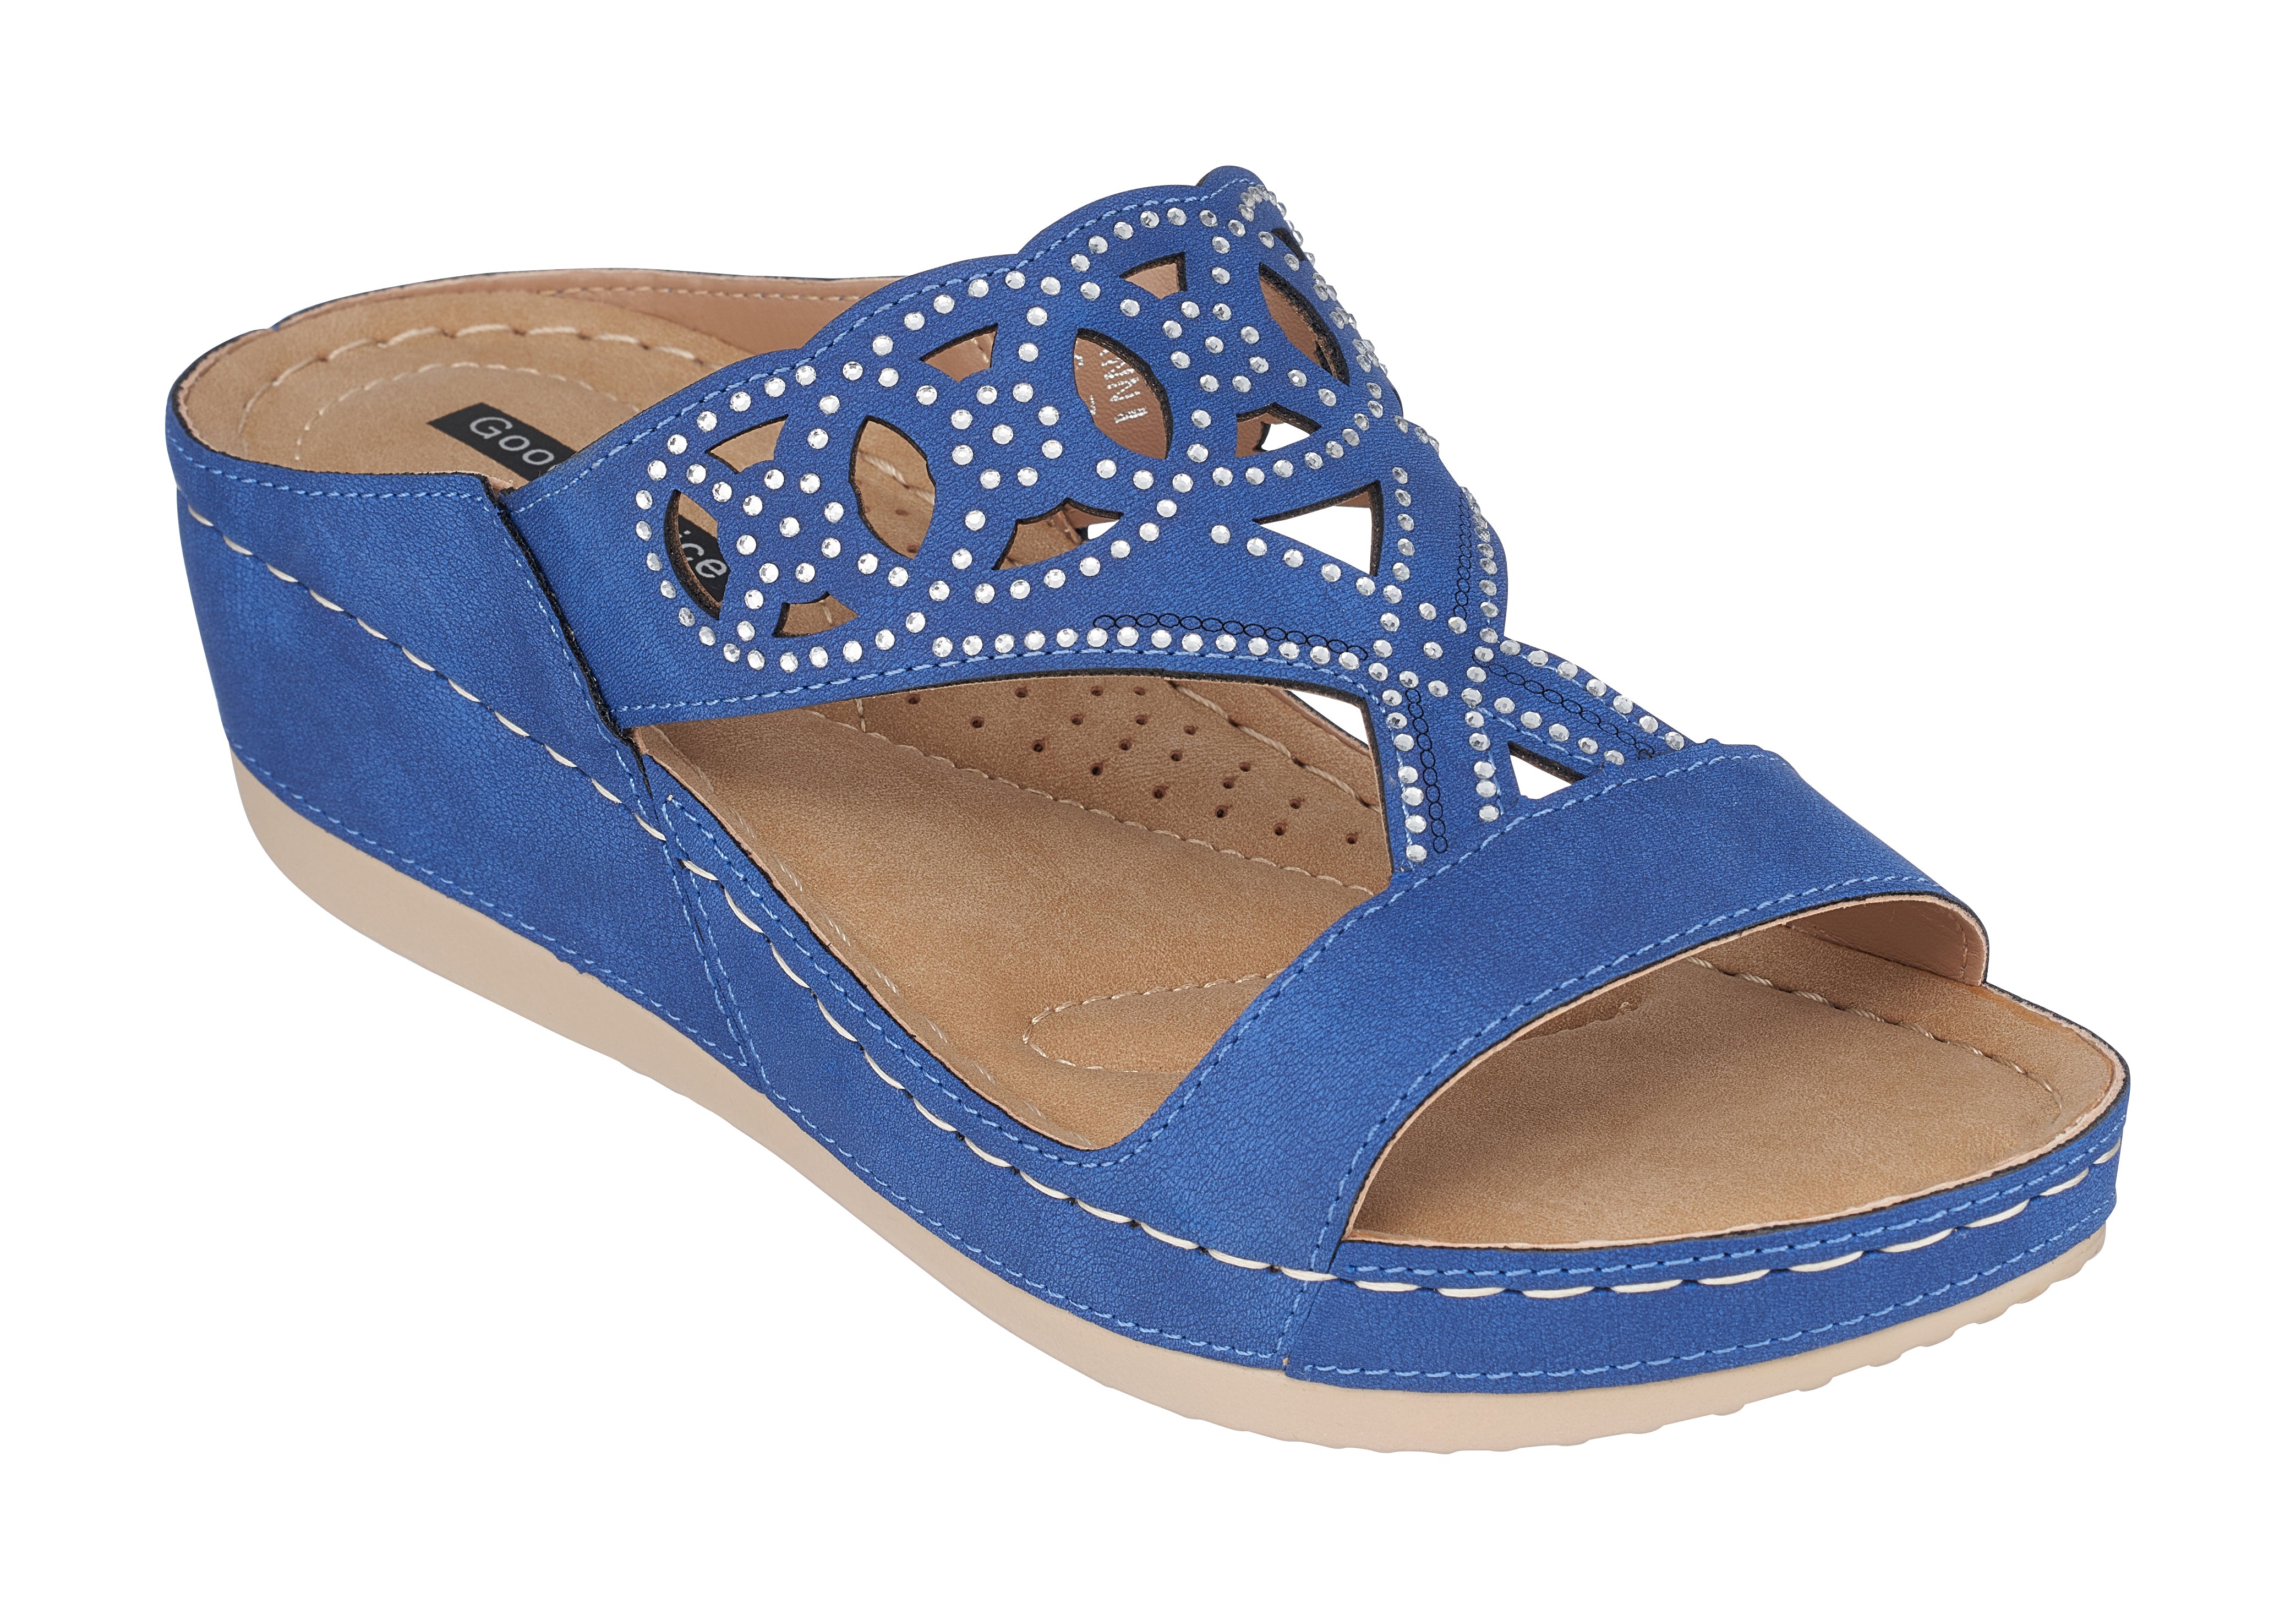 Women's Blue Wedge Sandals